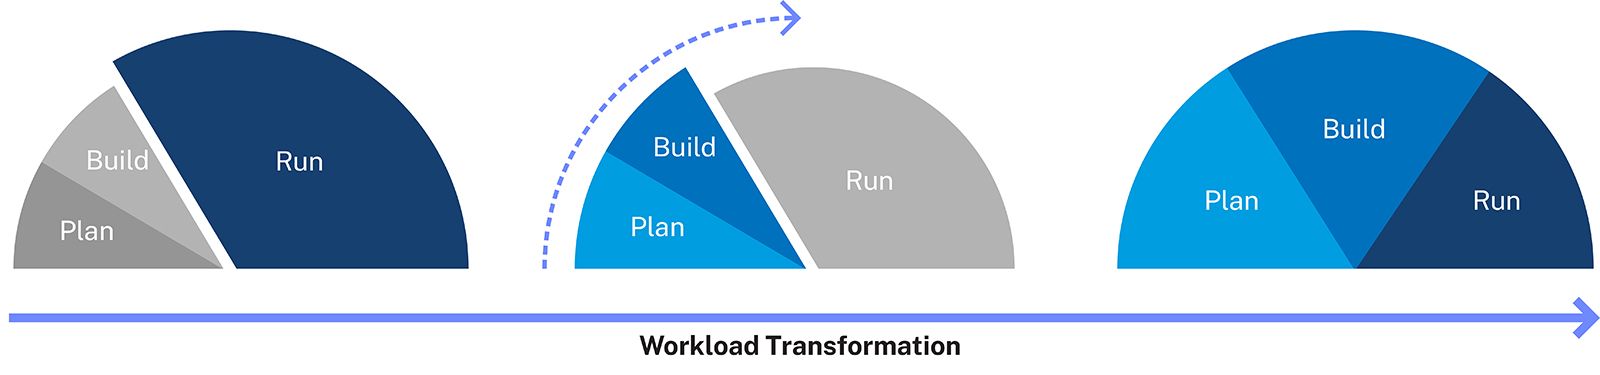 three half pie charts showing build plan run model